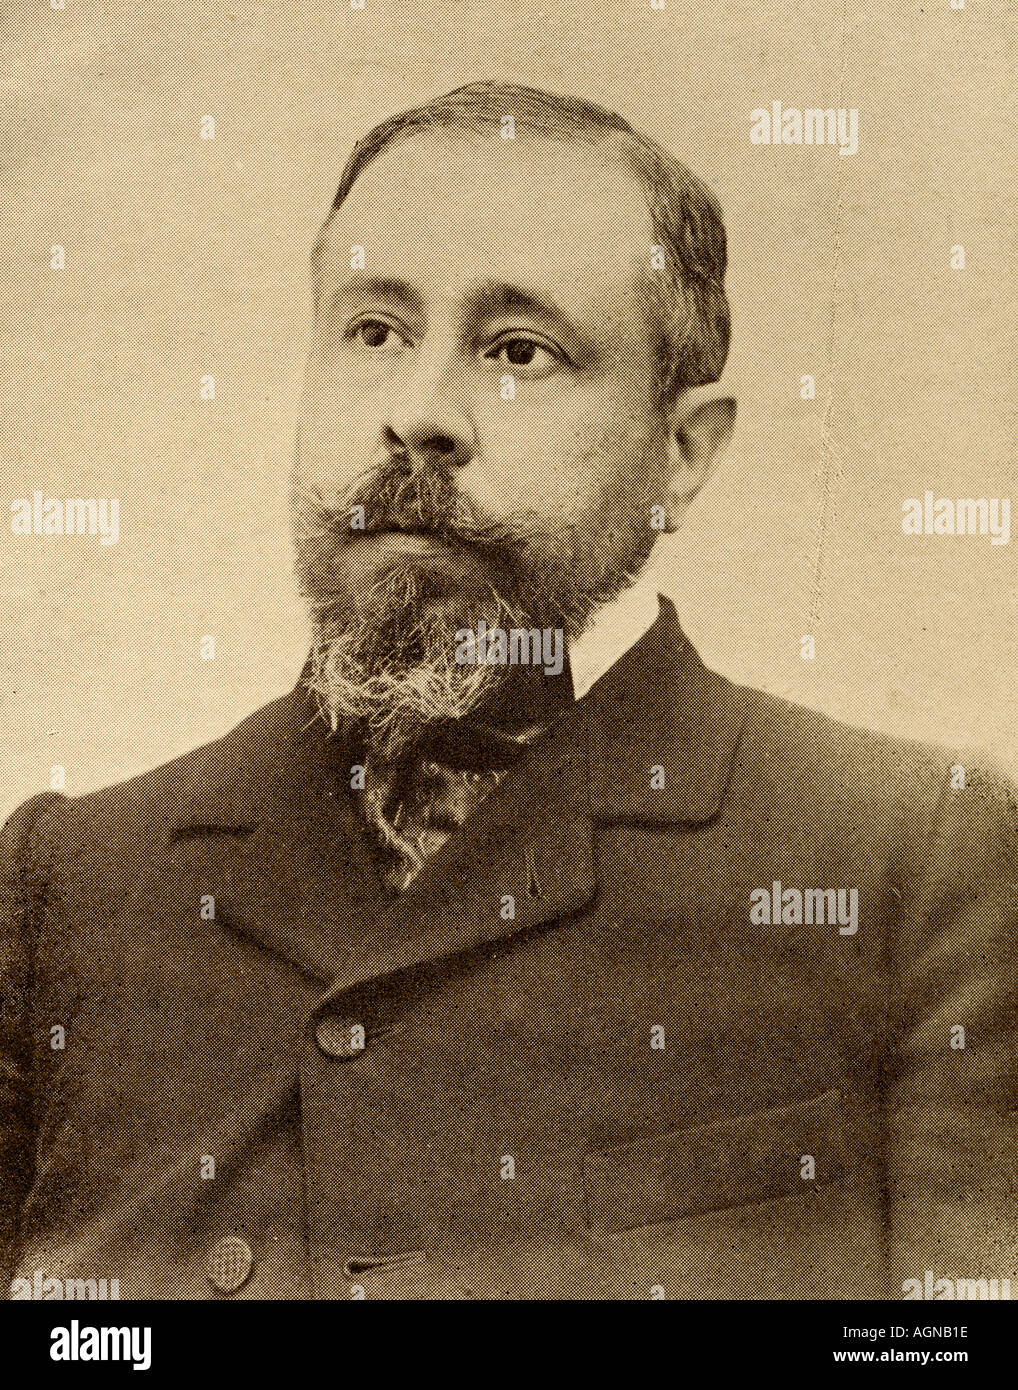 José Valentim Fialho de Almeida, aka Fialho de Almeida, 1857 - 1911. L'écrivain portugais, journaliste et traducteur. Banque D'Images